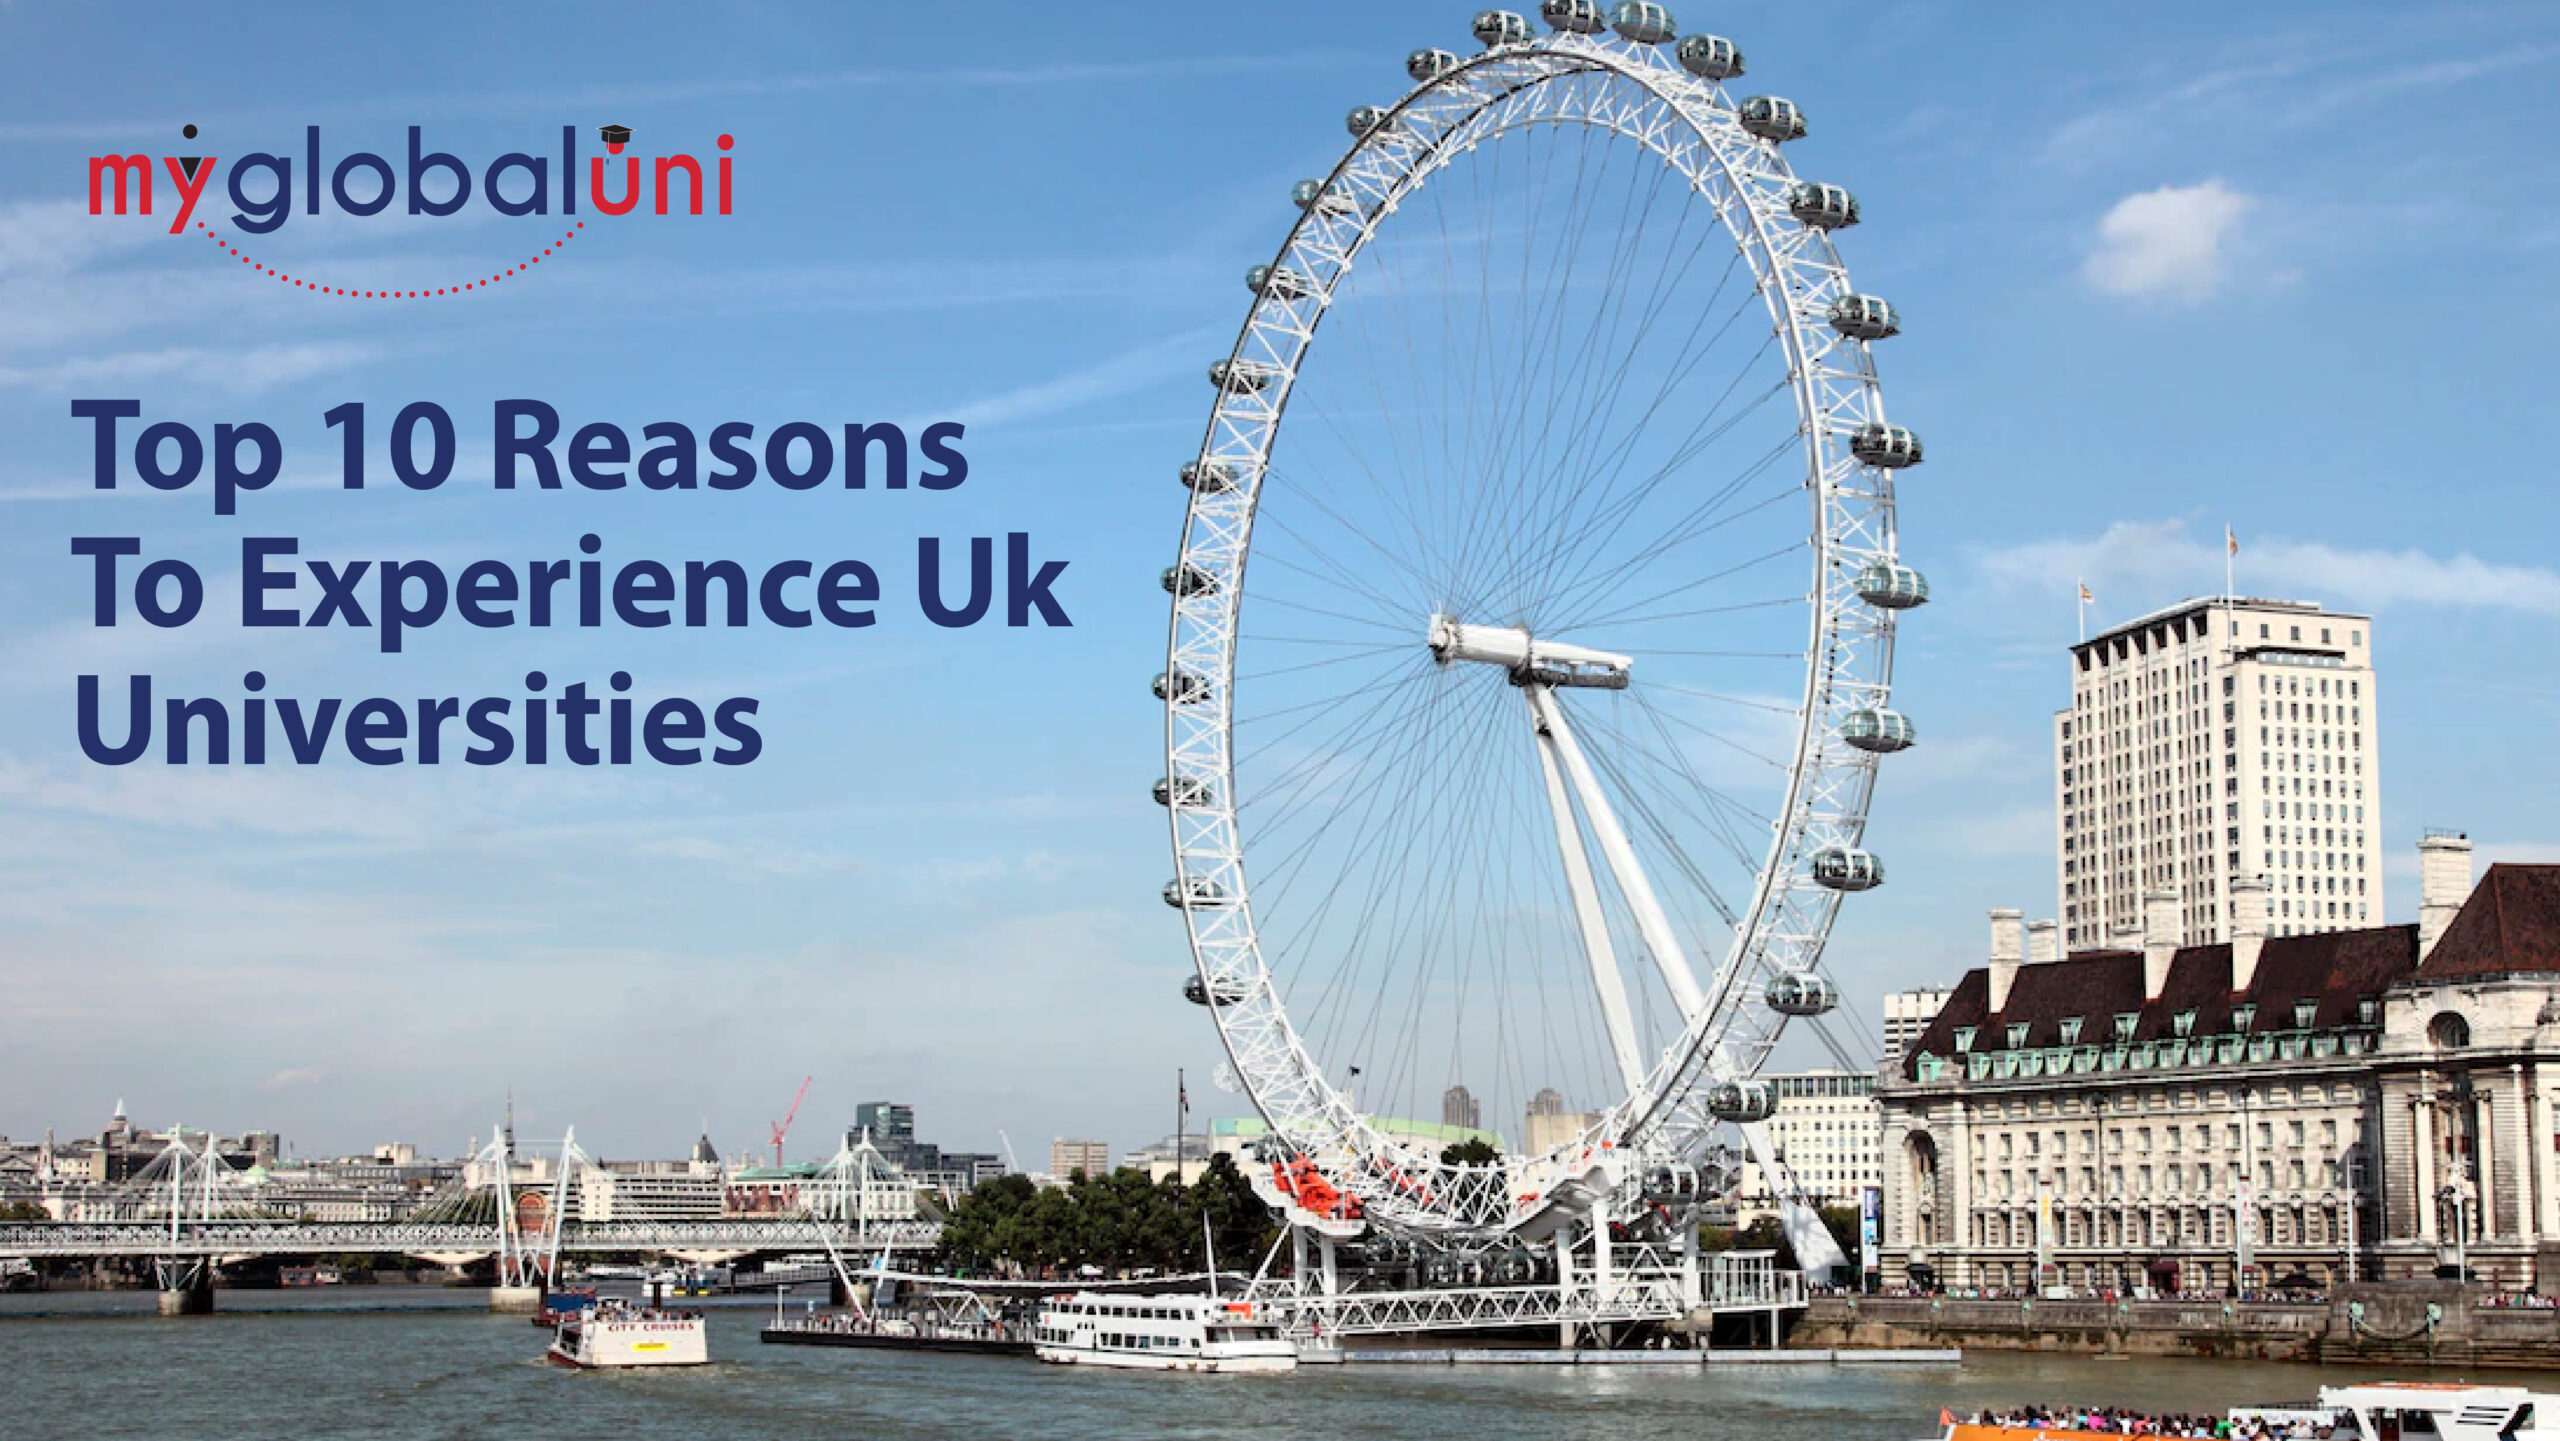 myglobaluni’s Top 10 Reasons To Experience UK Universities